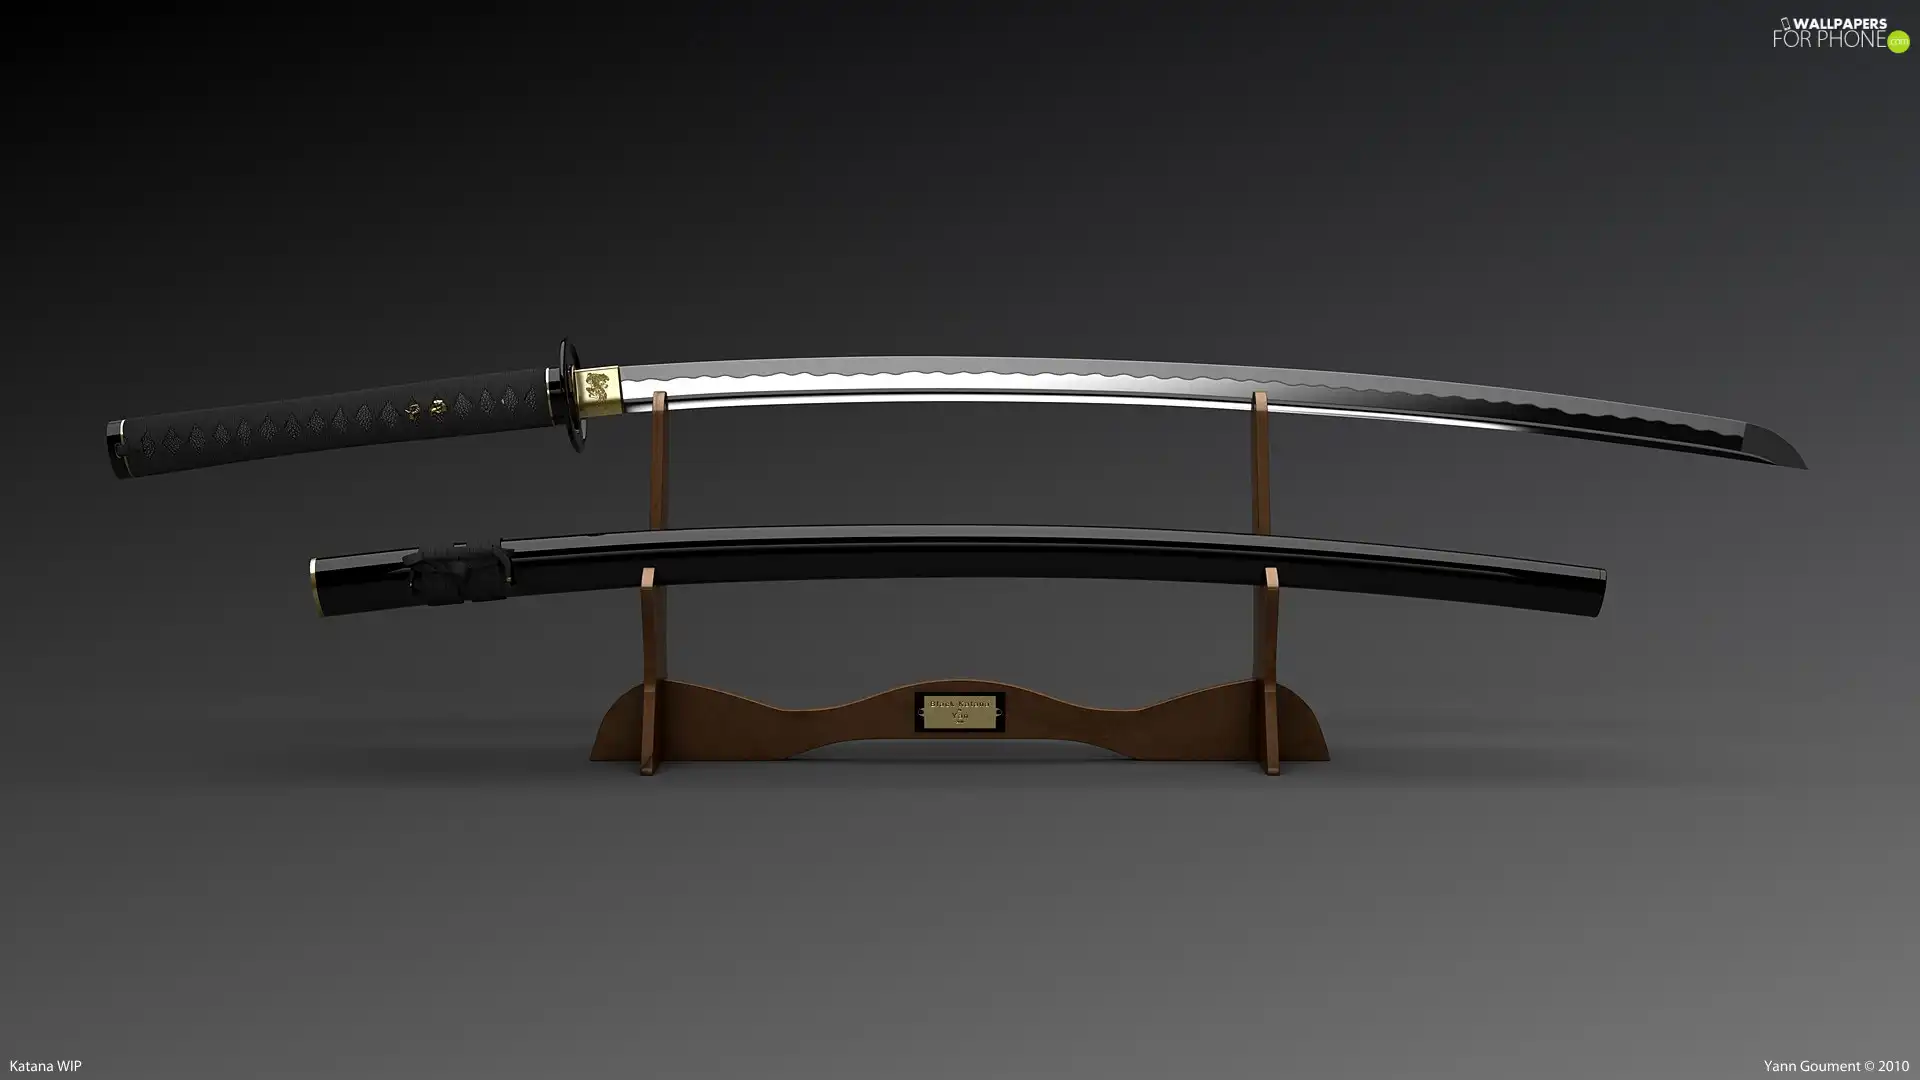 sheath, sword, samurai